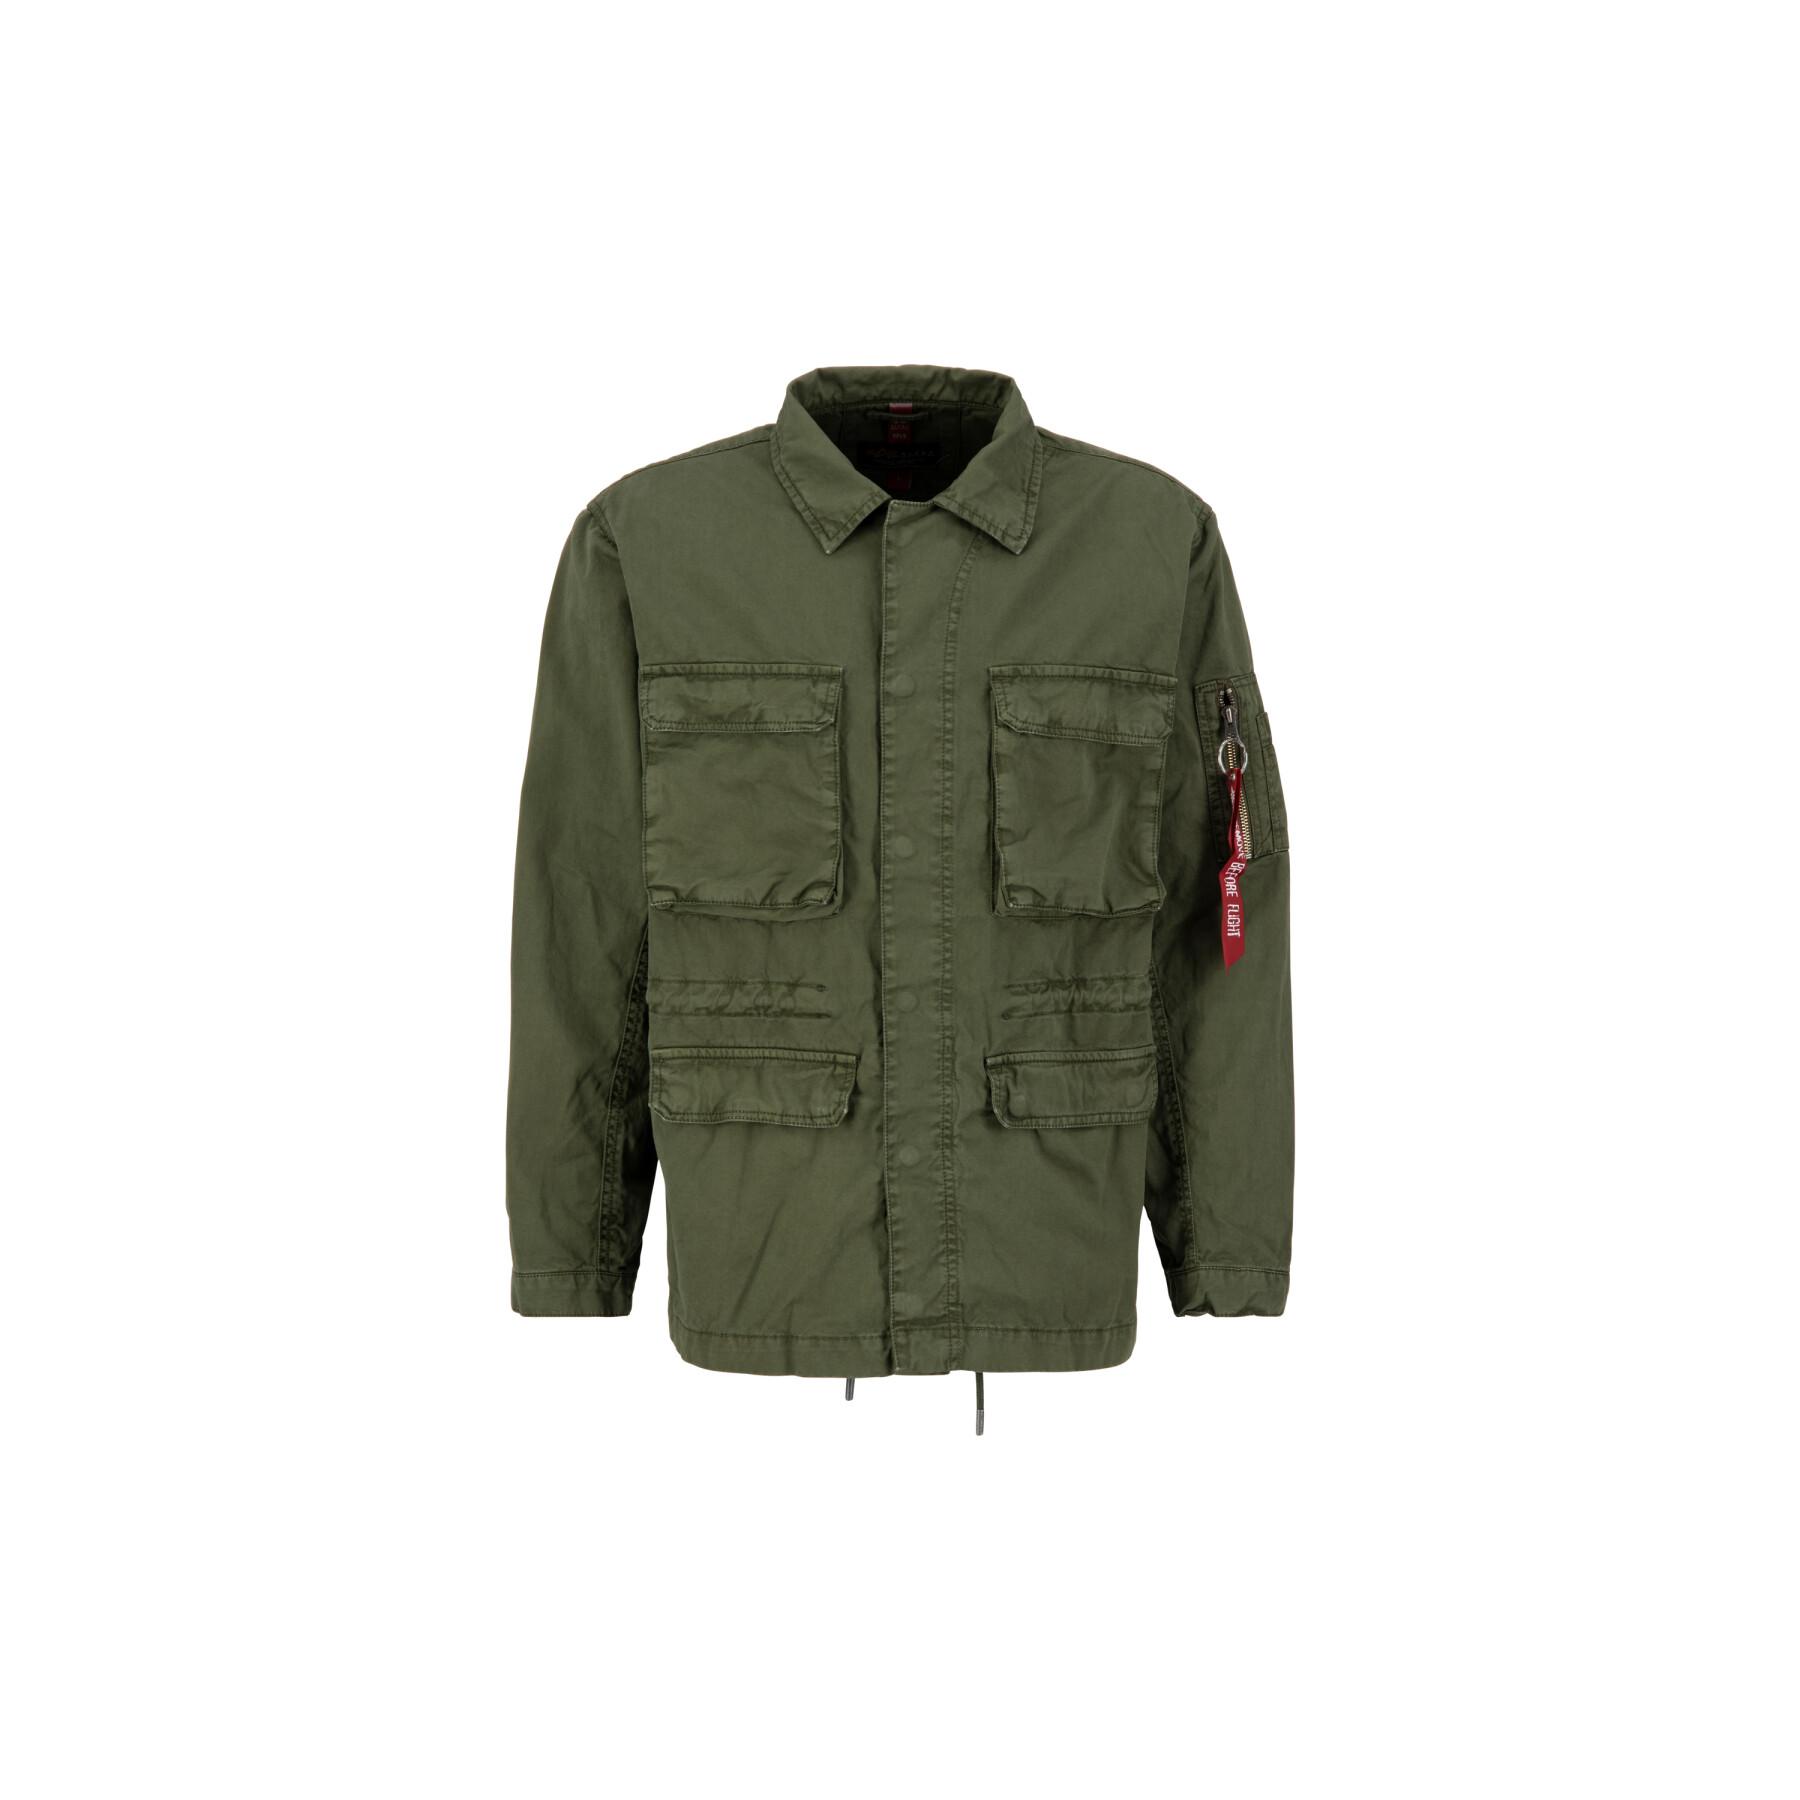 LW - - Field Alpha Jackets Jacket - Clothing Industries Men